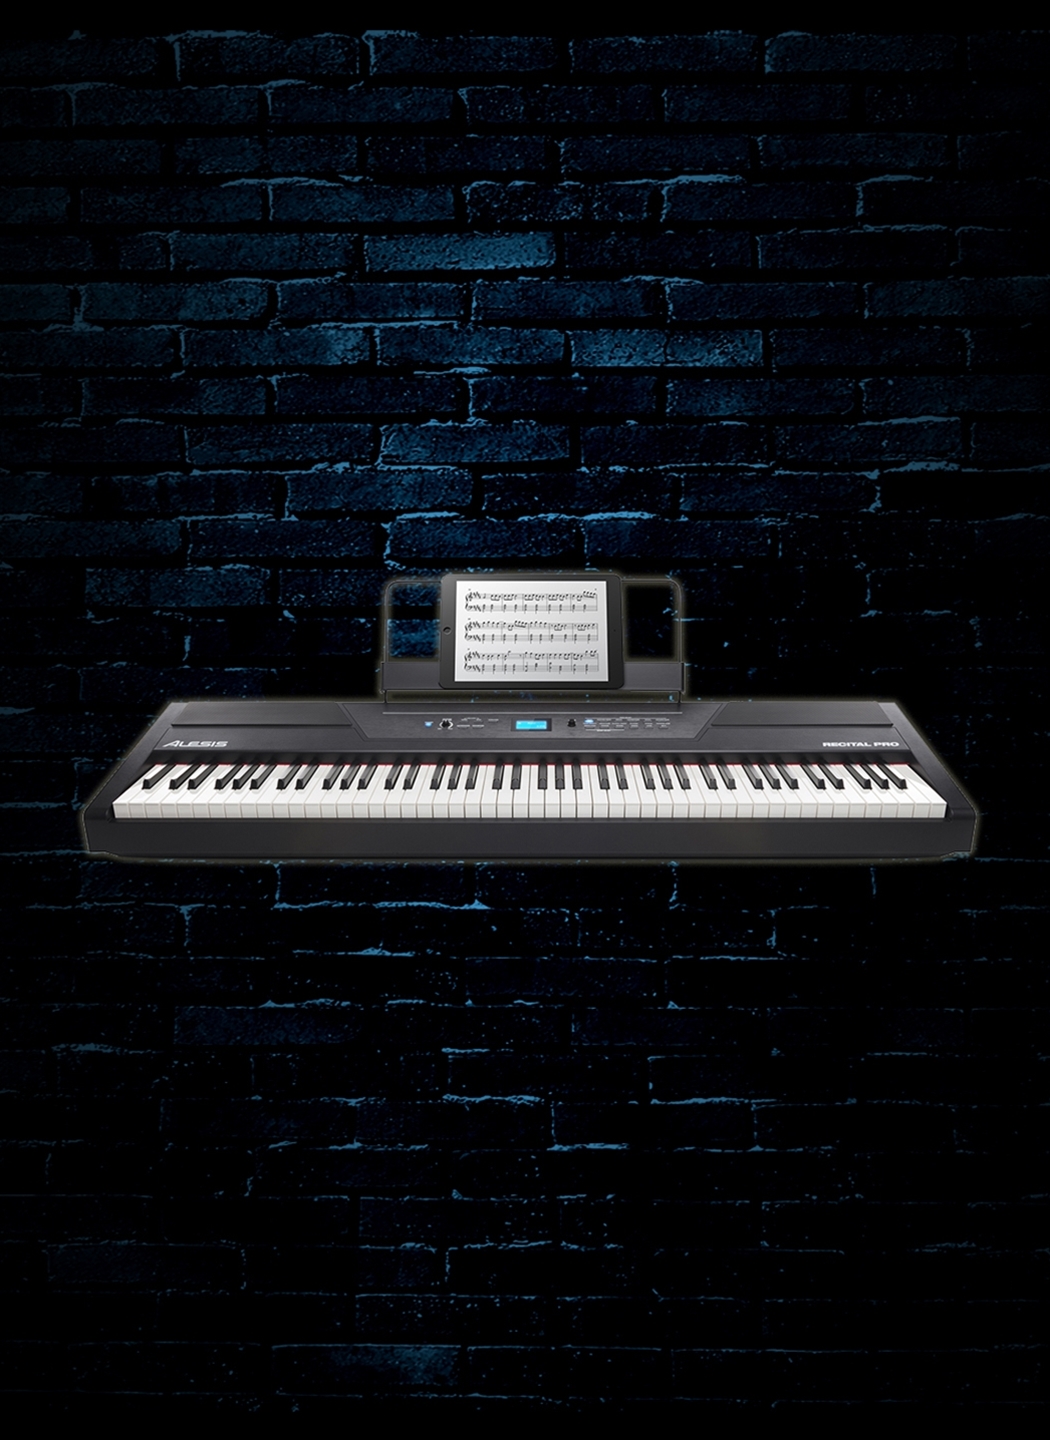 Alesis Recital Pro 88-Key Digital Piano